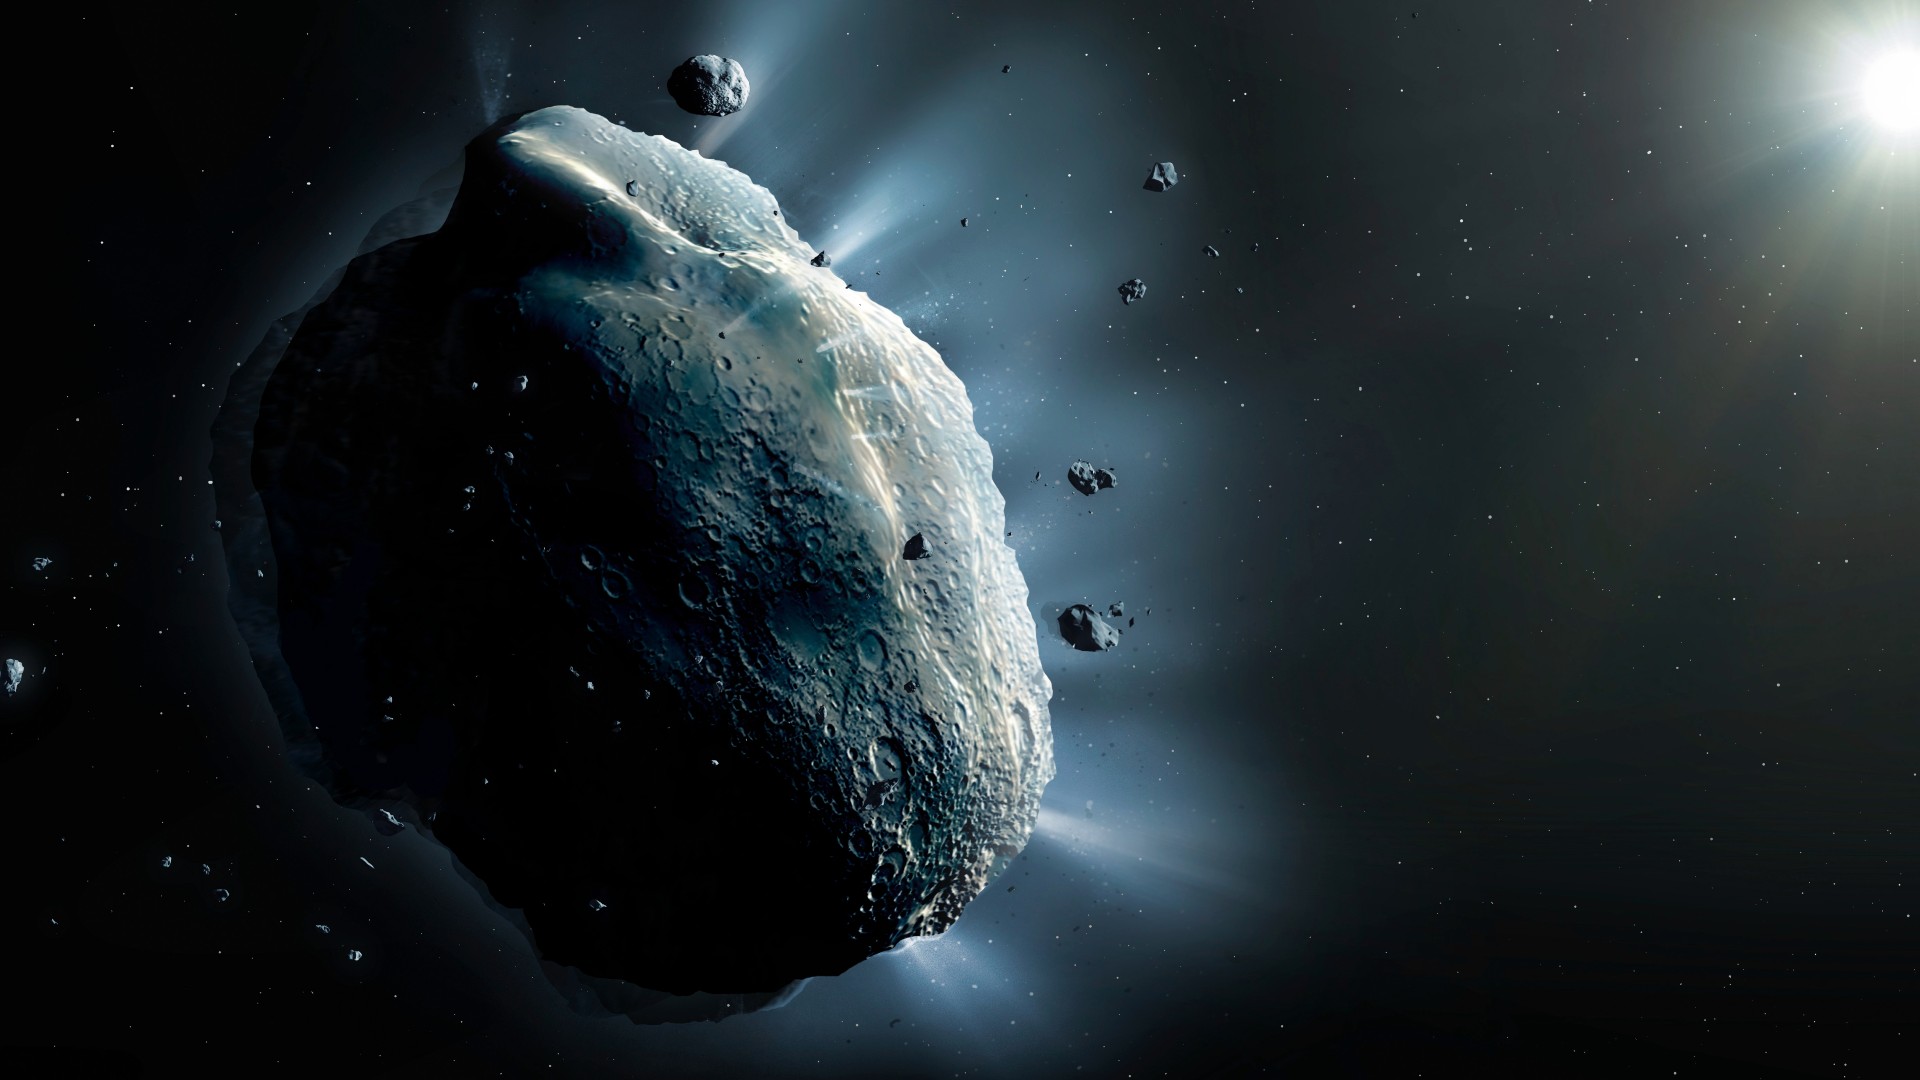 Enorme asteroide 7335 1989 JA passara pela Terra em 27